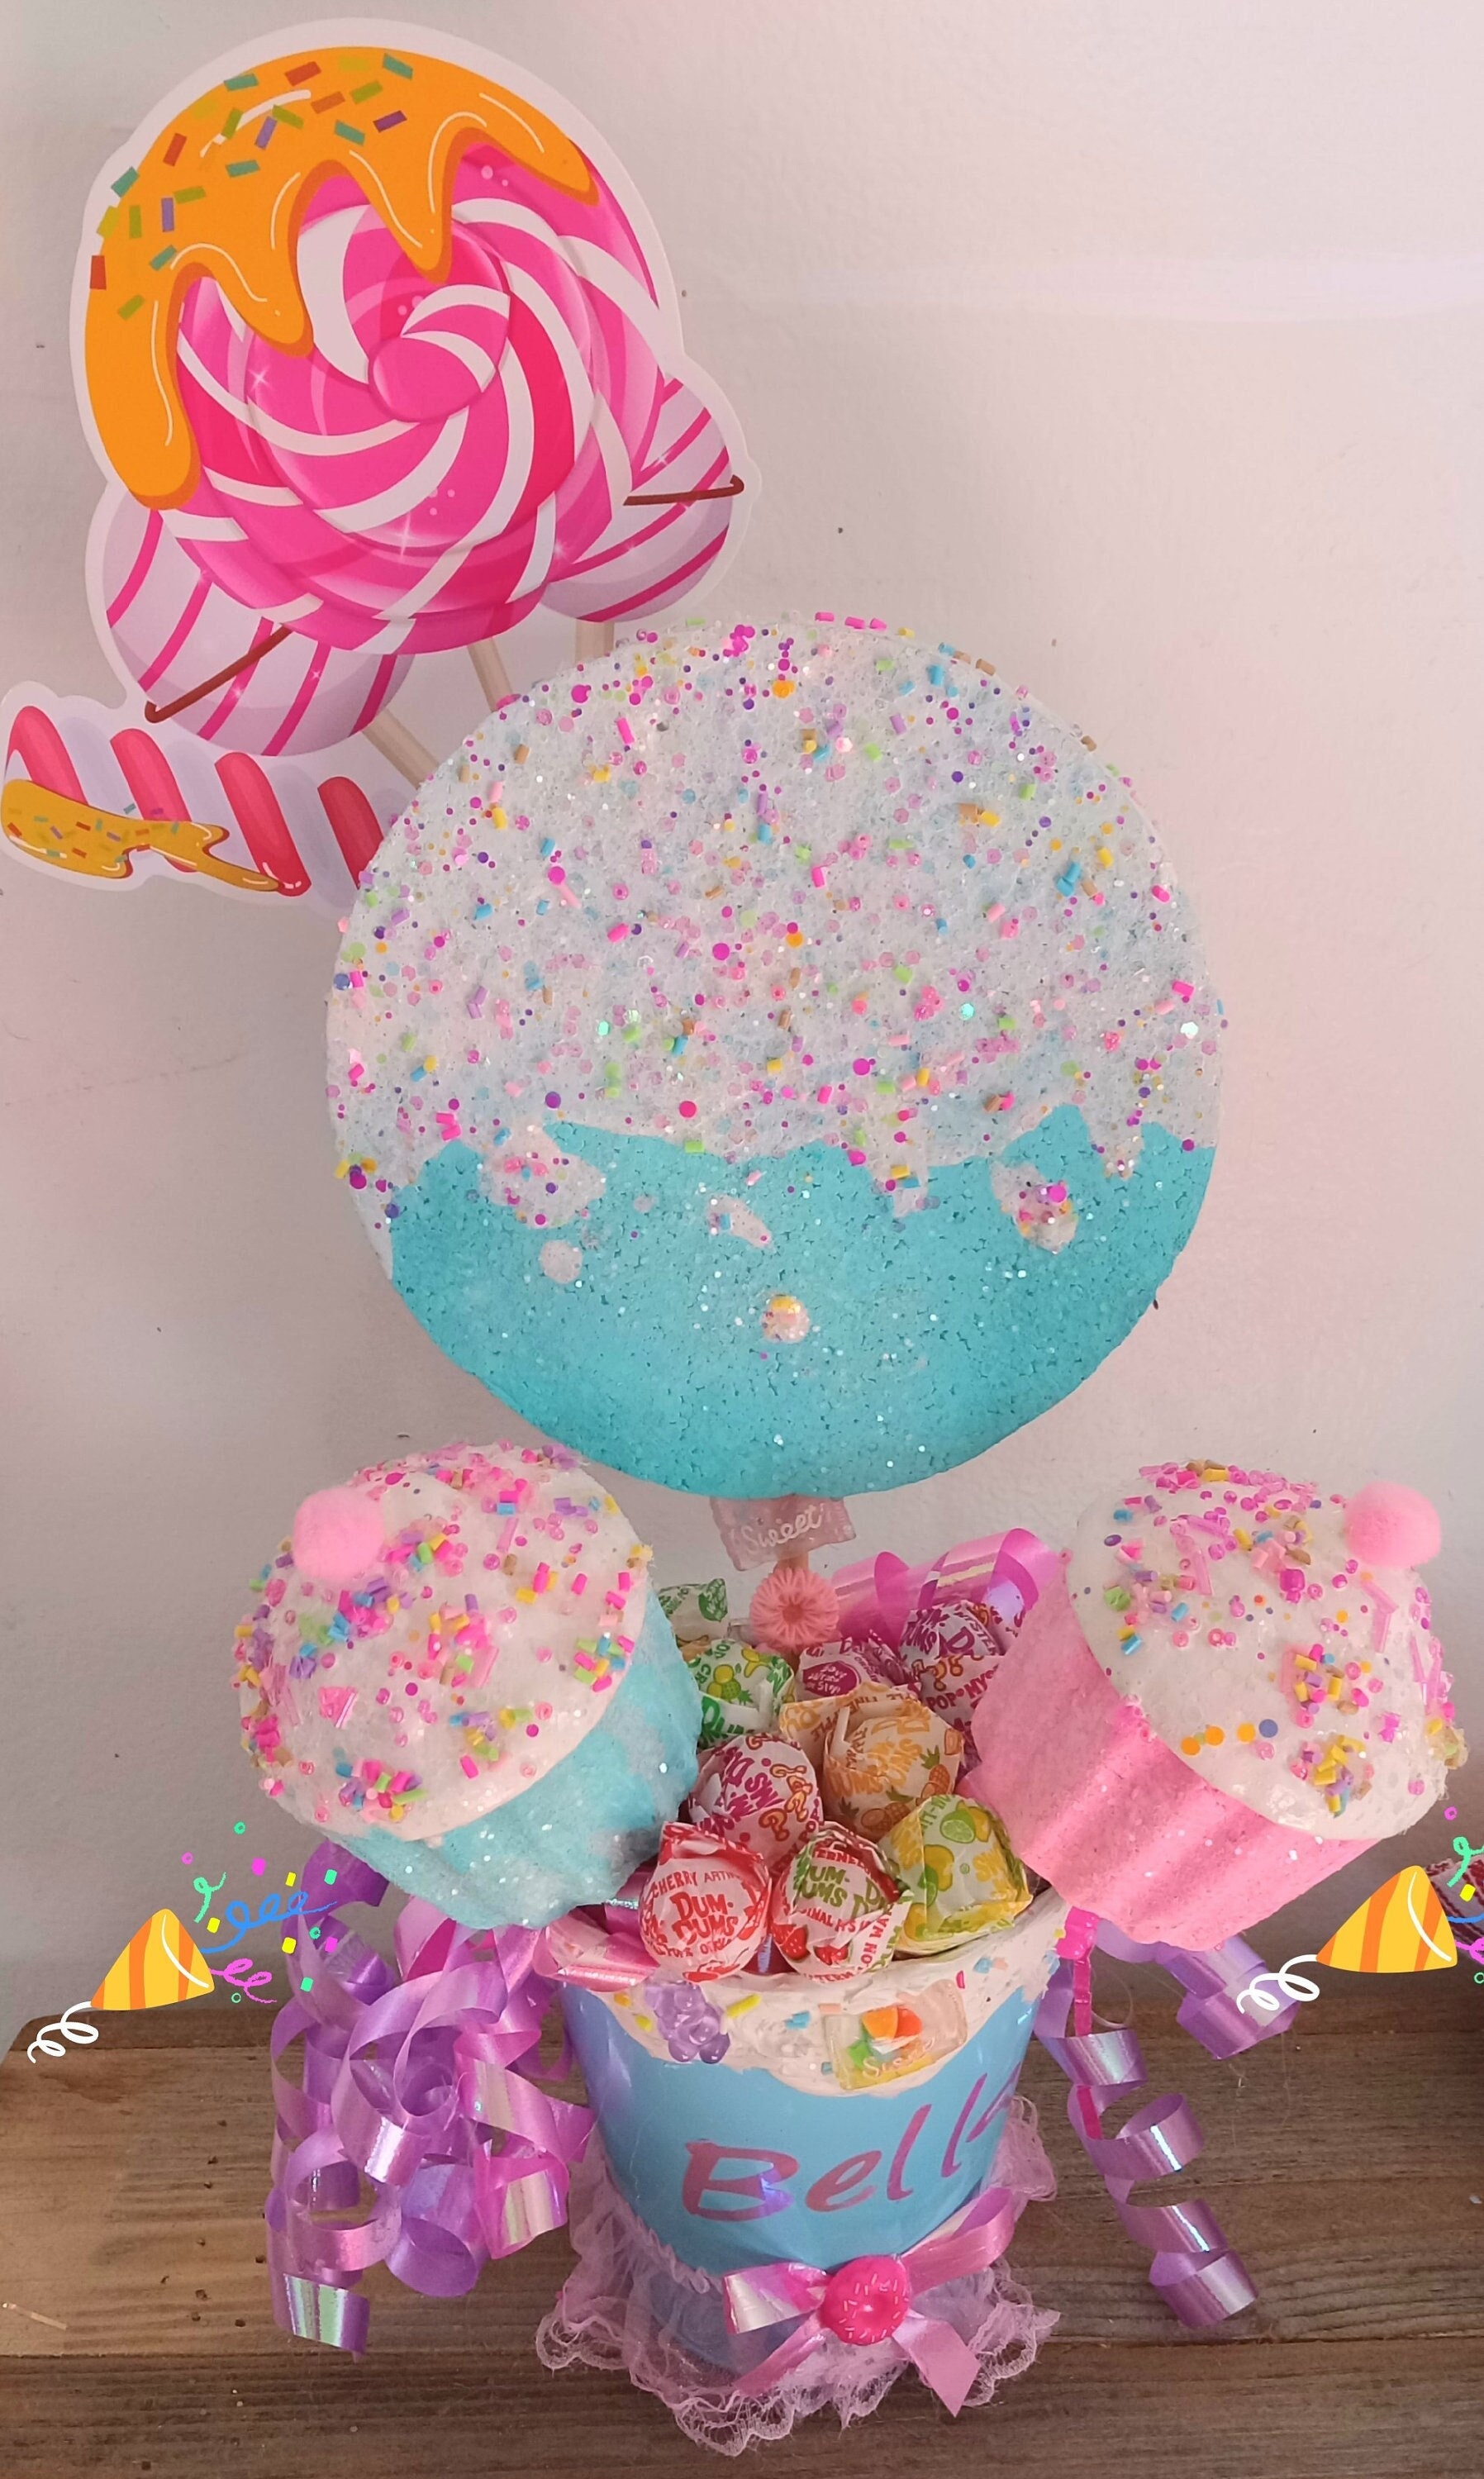 12 BODYSUIT Large Chocolate Lollipops Baby Shower Favors Candy Boy Girl  Gender Reveal Ideas 